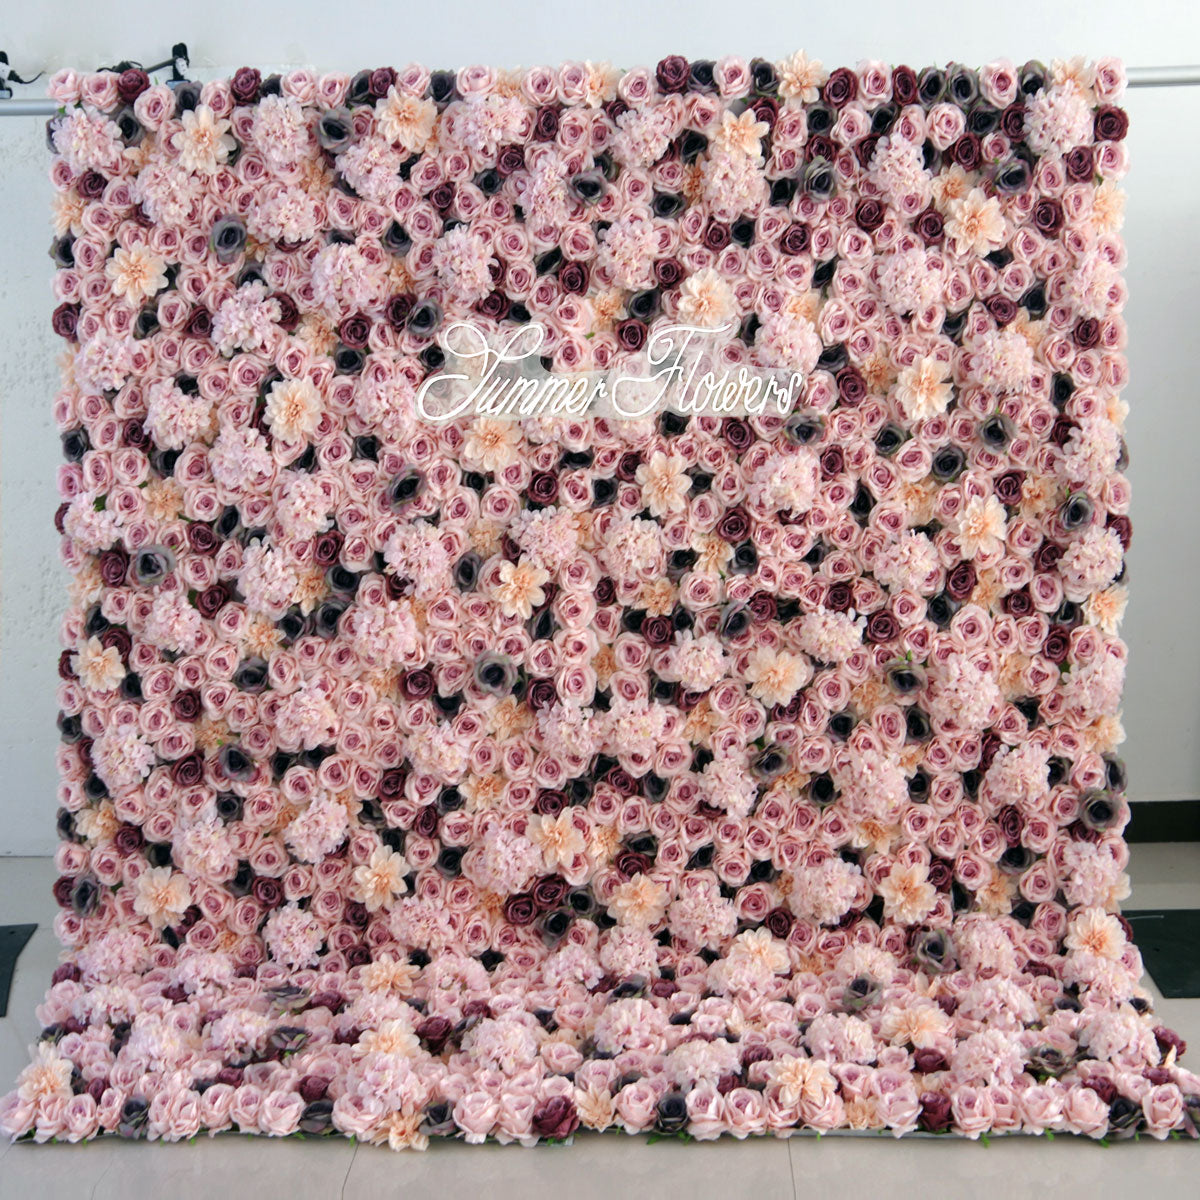 Summer Flower:CB-062 8ft*8ft Cloth Back Artificial Flower Wall Backdrop